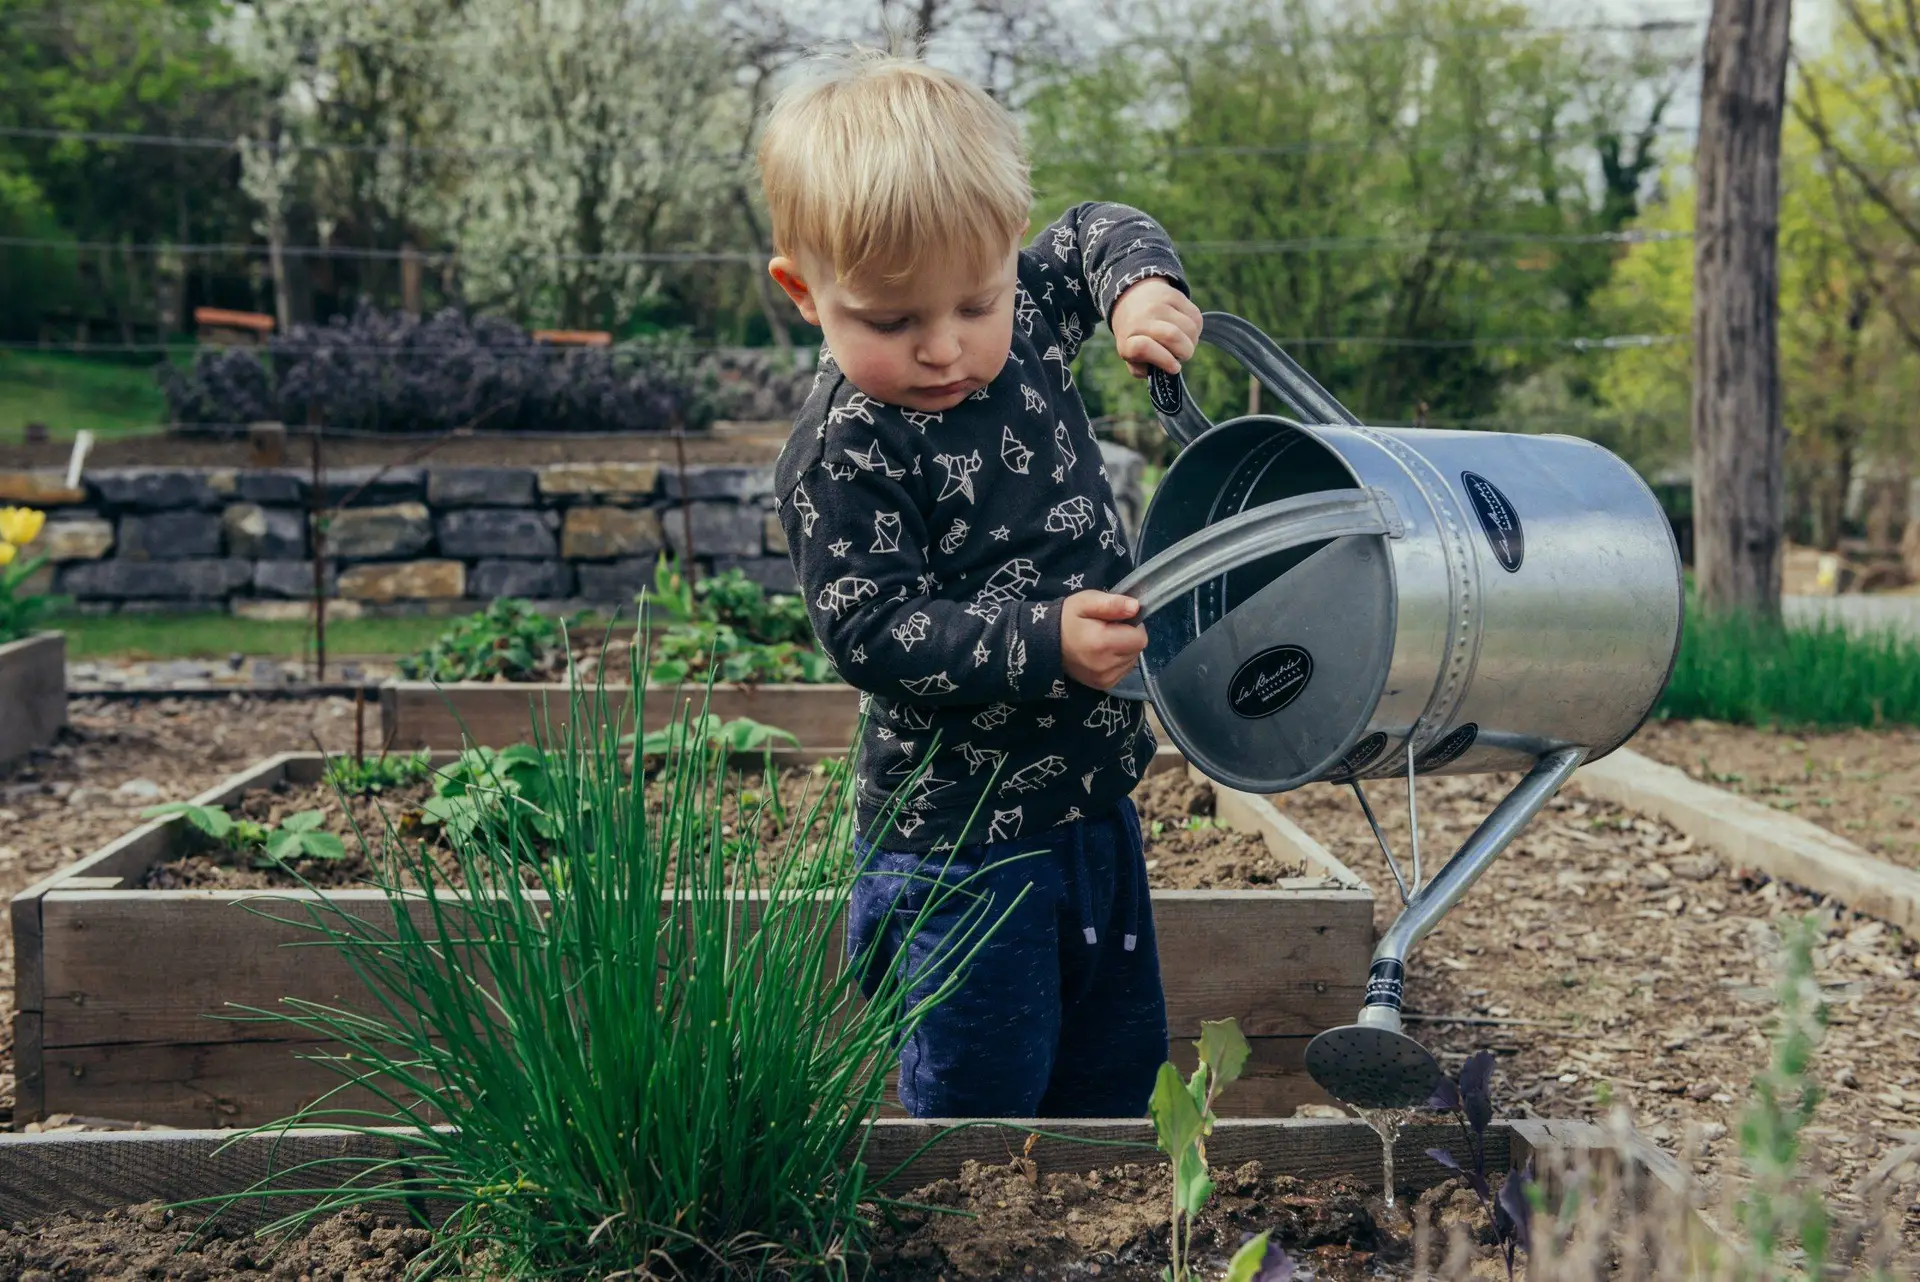 Boy doing fun outdoor activity - gardening